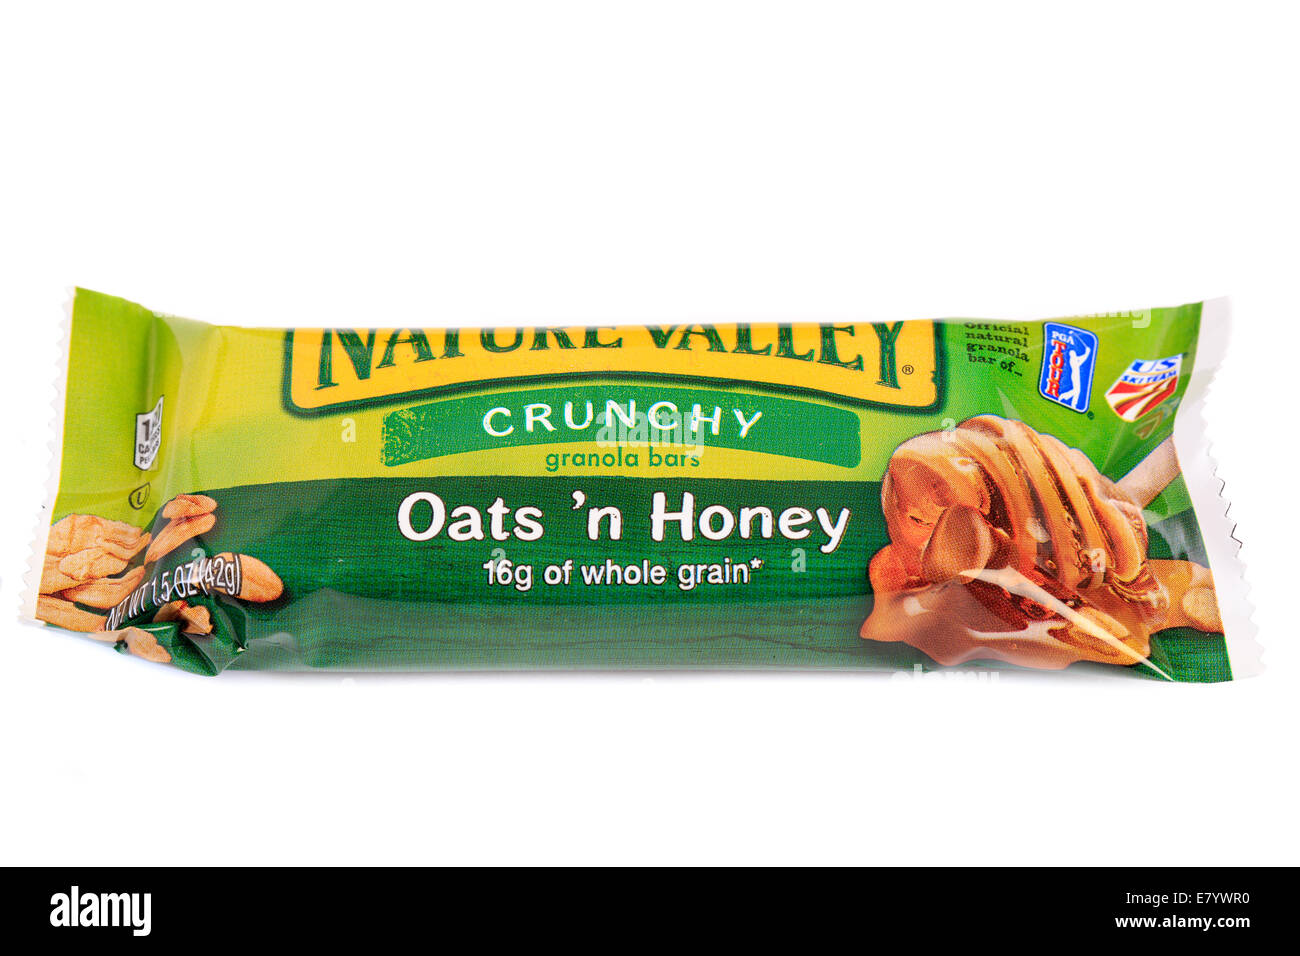 Nature Valley crunchy oats 'n honey granola bars Stock Photo